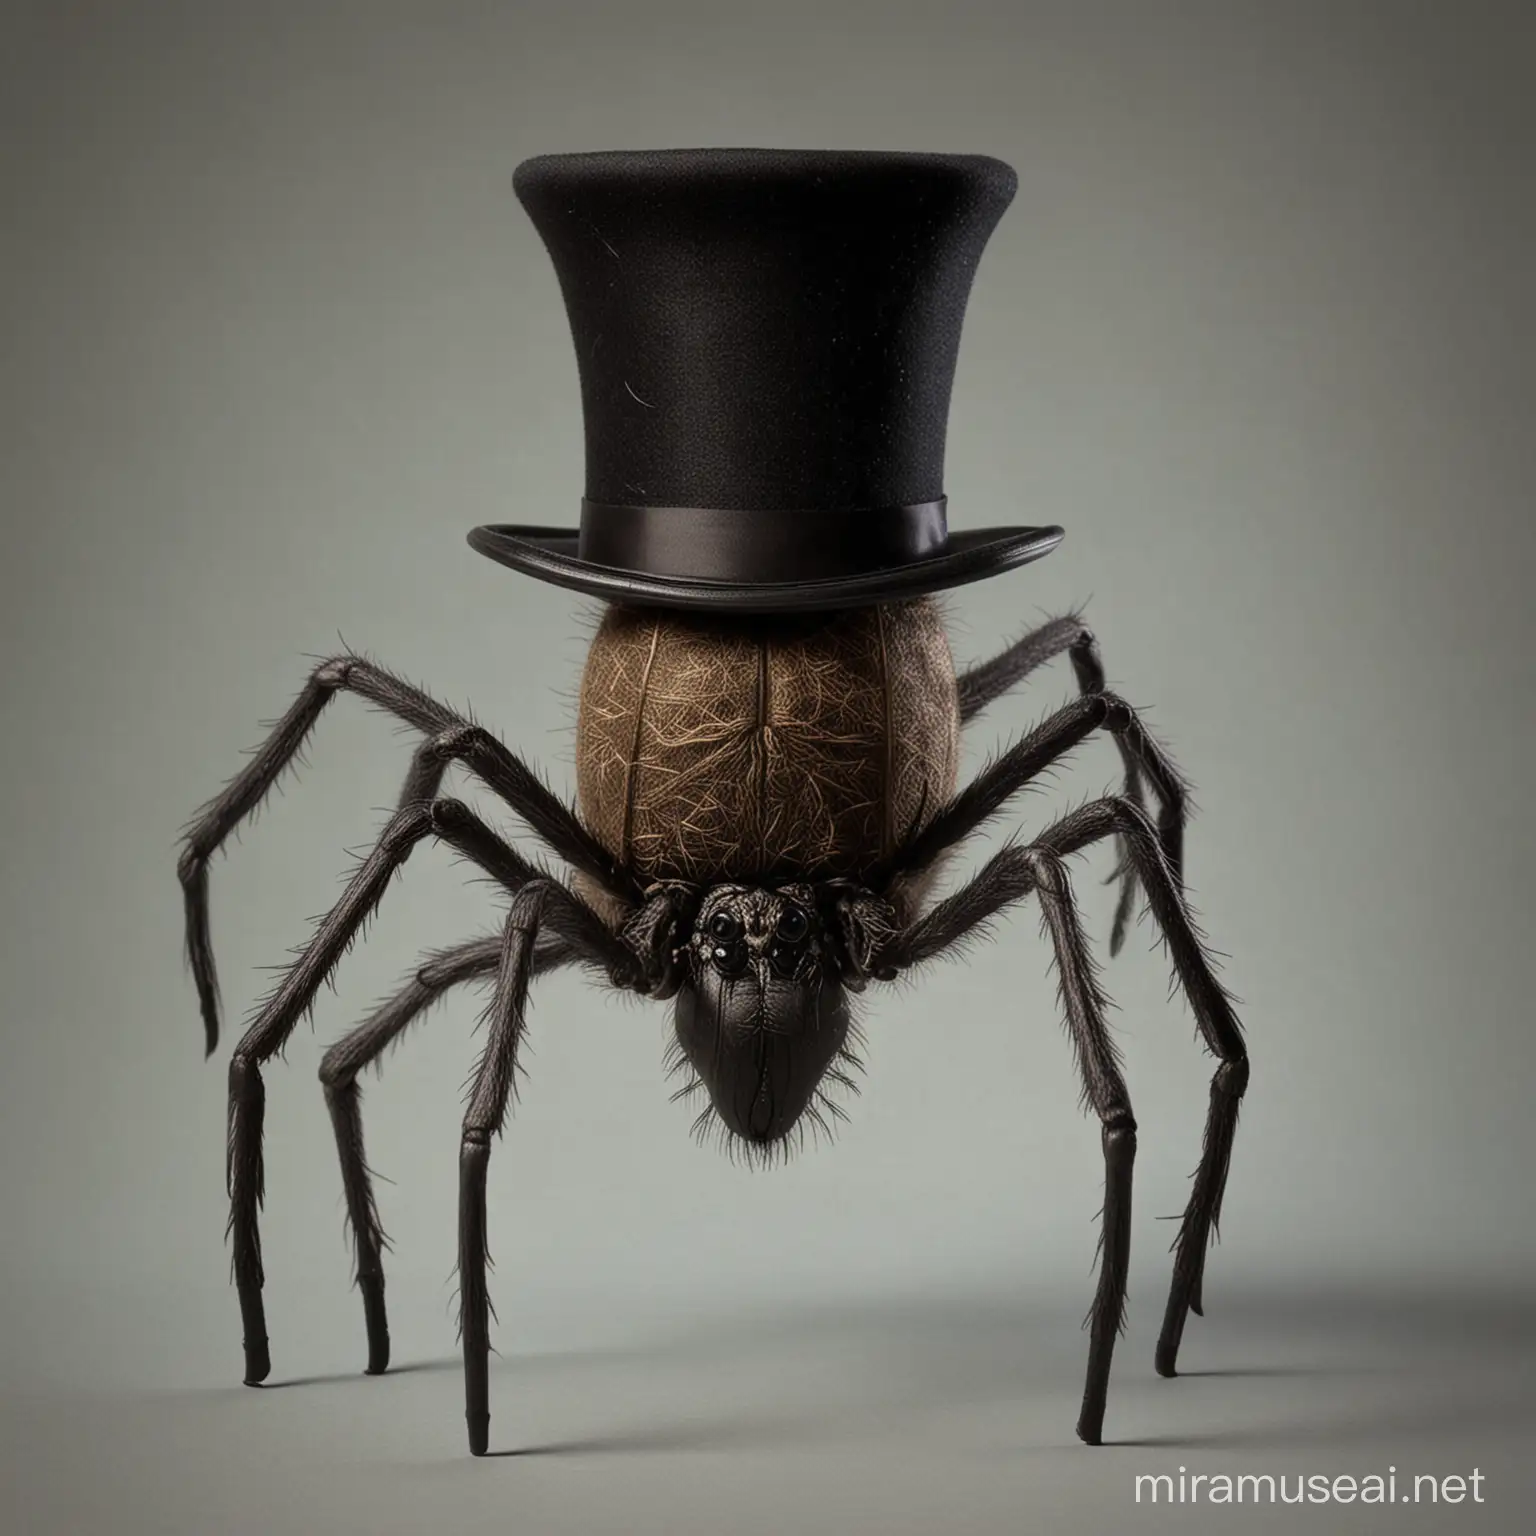 Elegant Top Hat with Spider Legs Halloween Costume Idea